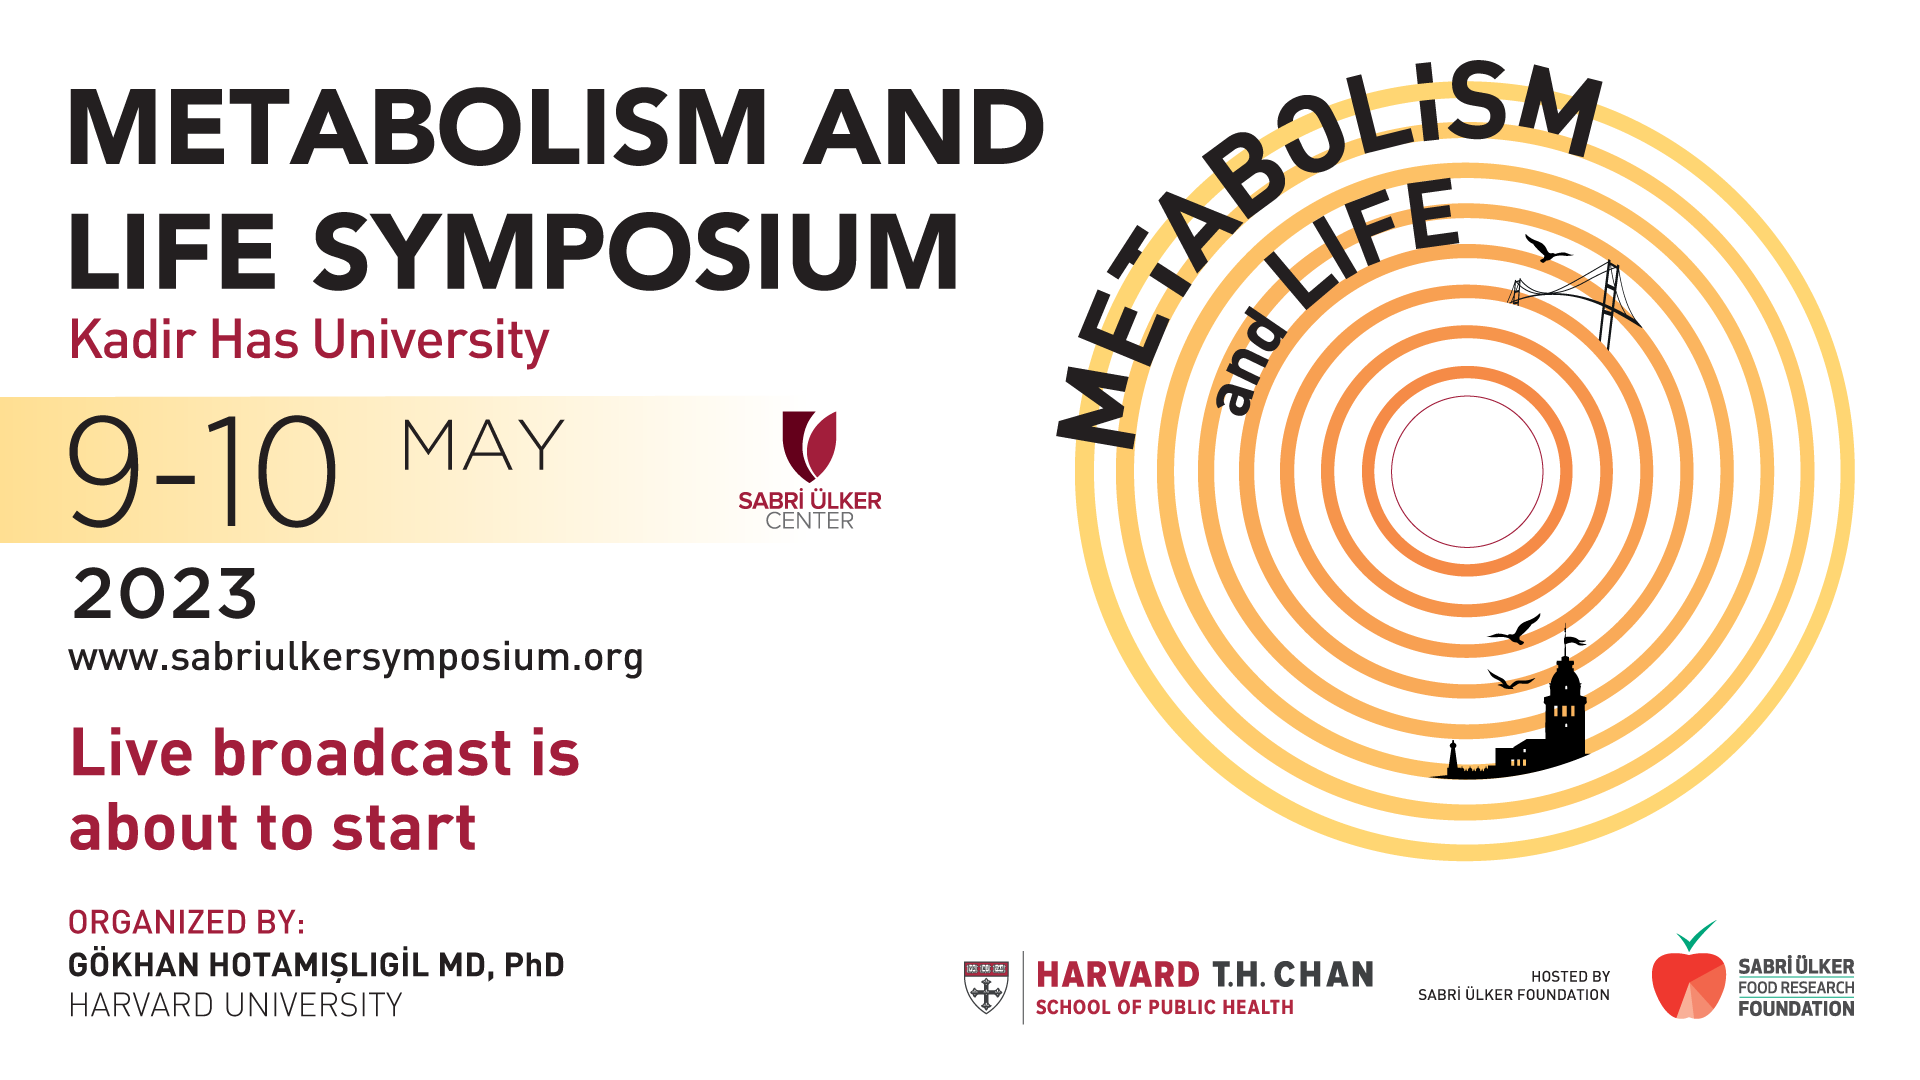 Metabolism and Life Symposium